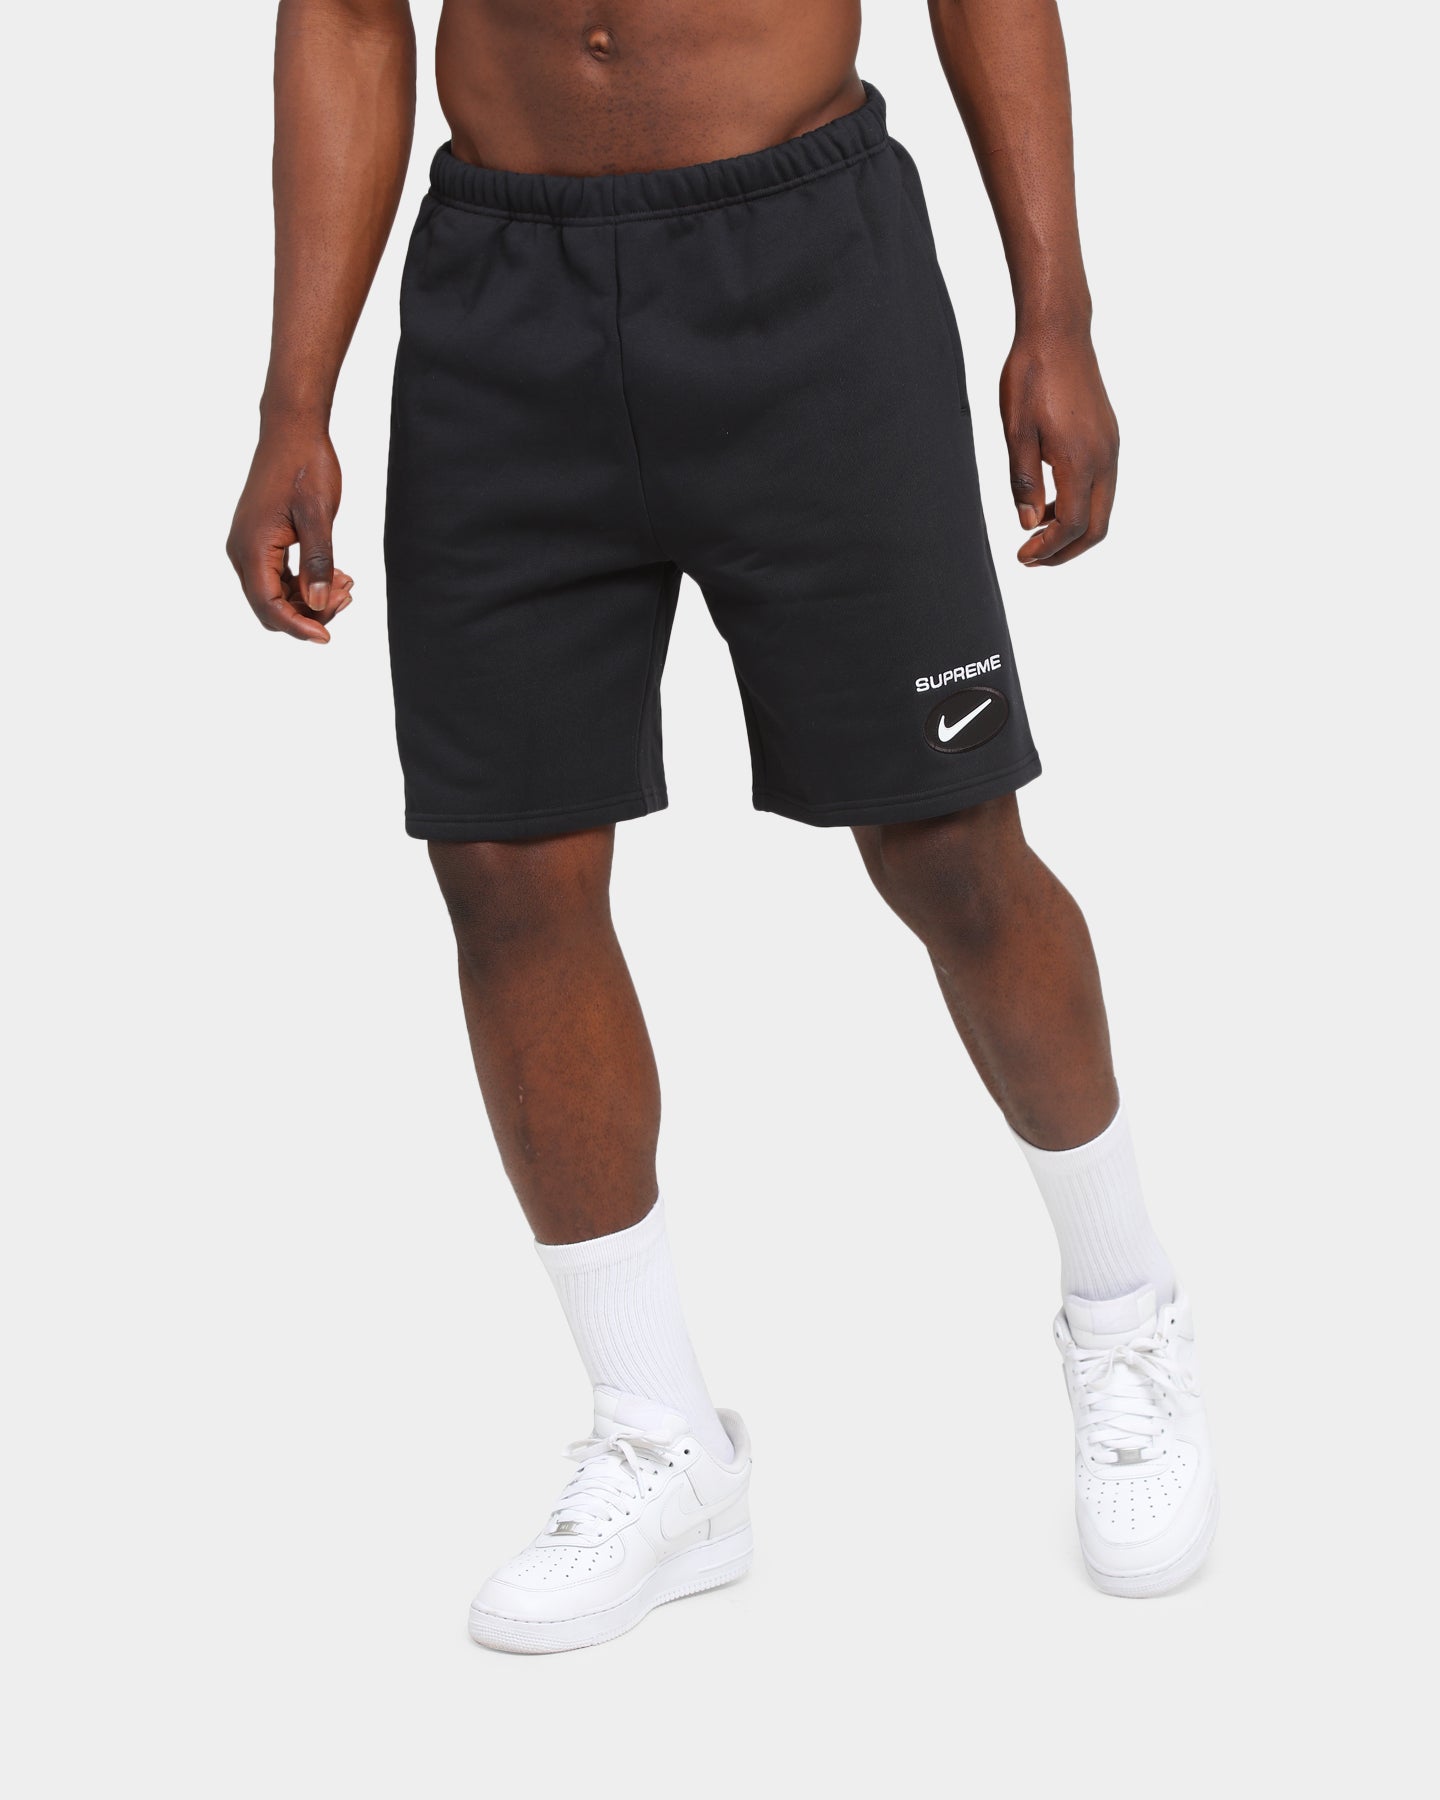 Supreme Black Shorts on Sale, 54% OFF | www.pegasusaerogroup.com